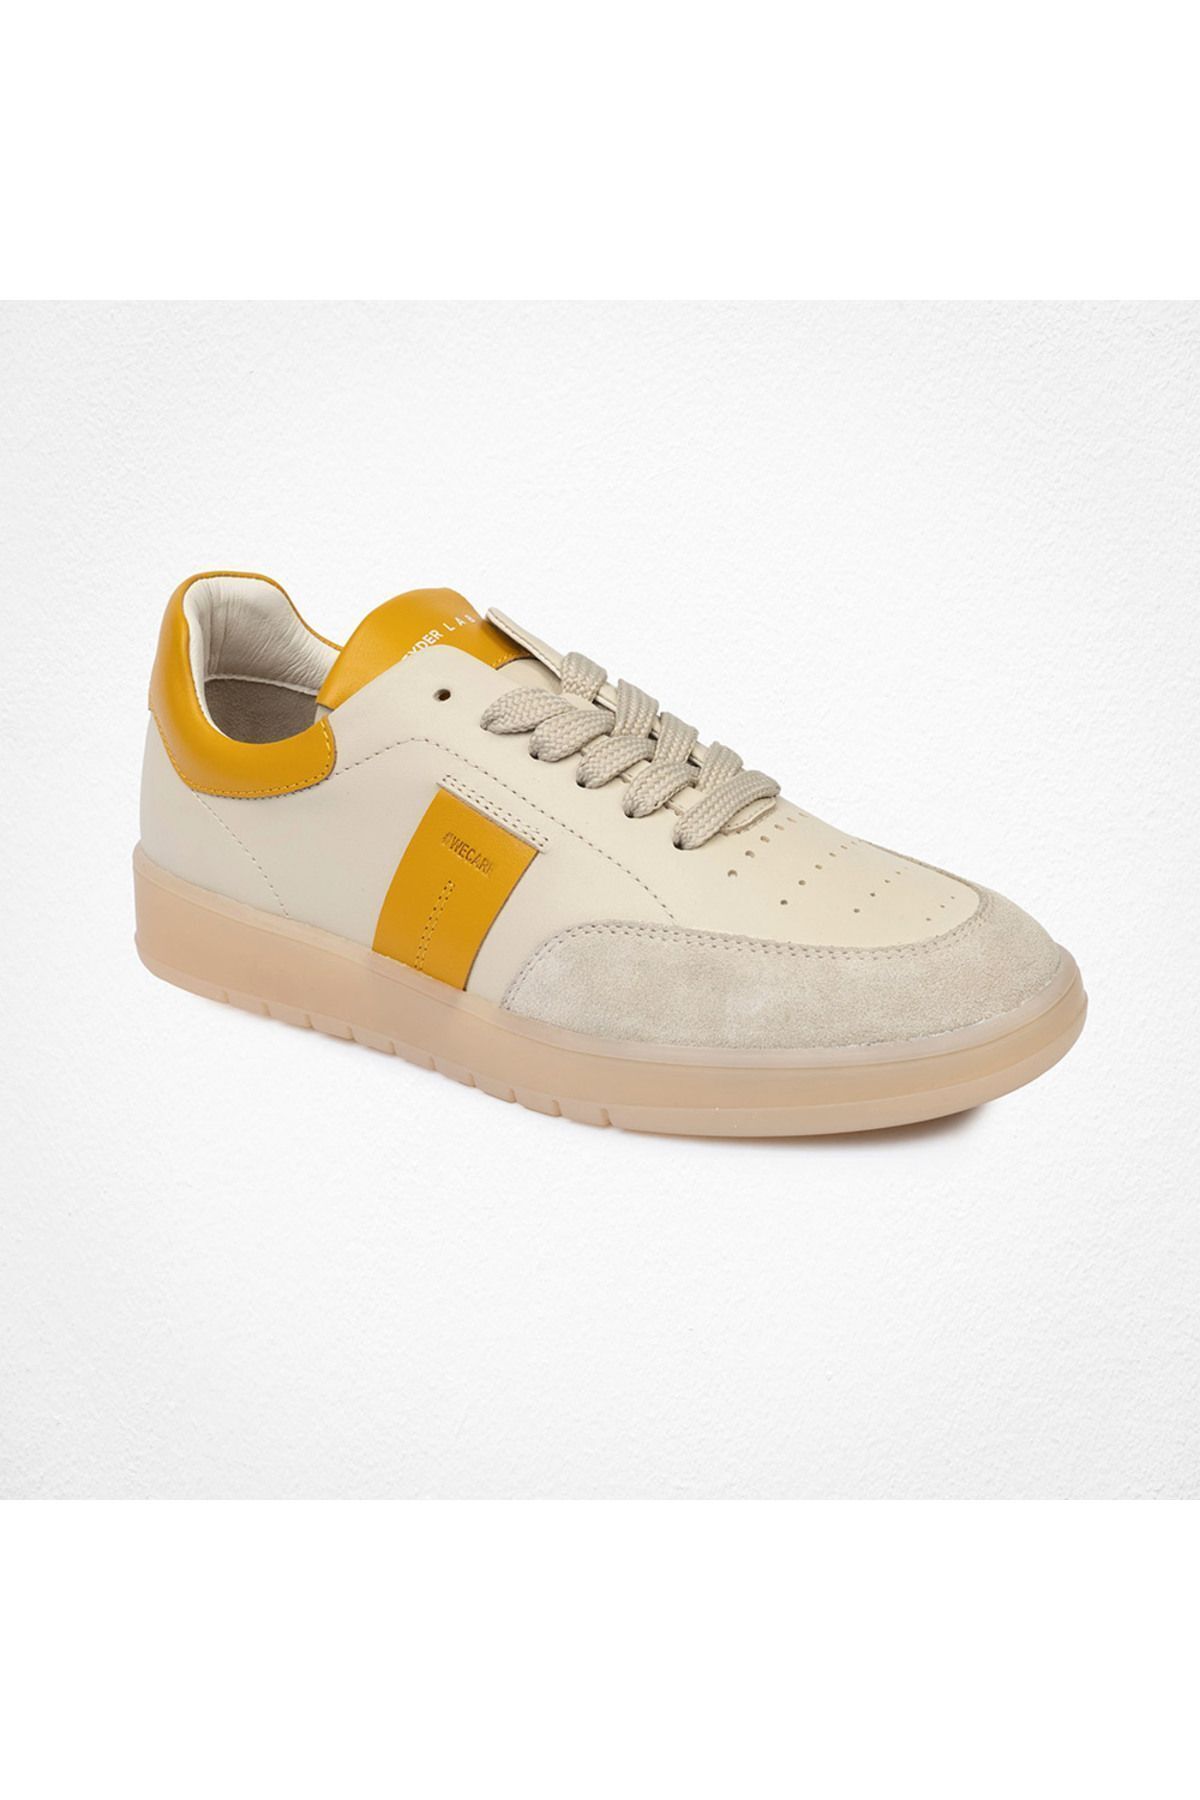 Greyder Lab Kadın Sarı Sneaker Ayakkabı 4y2sa45160